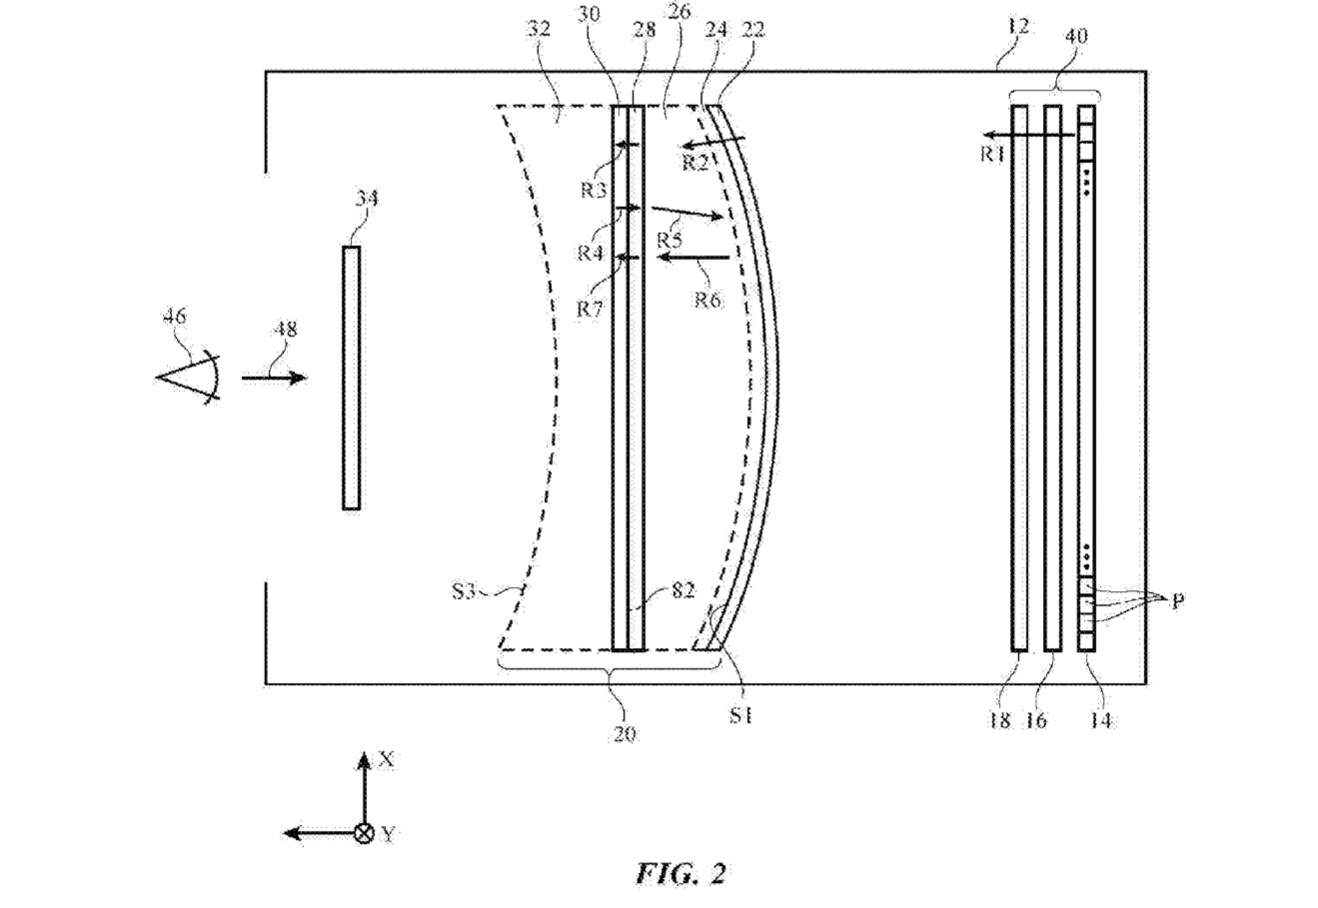 applearvr optics patent